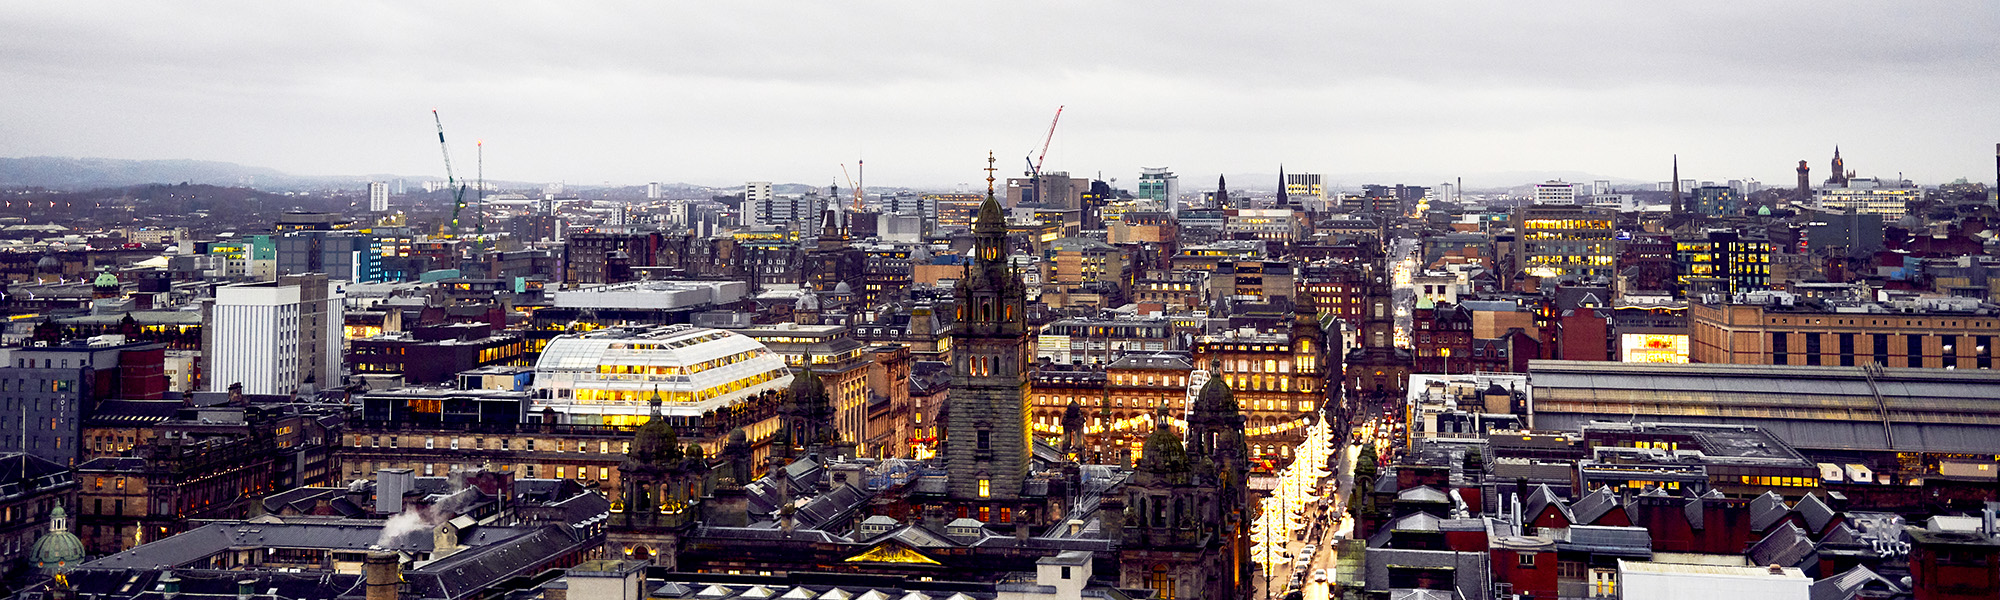 Nighttime shot of Glasgow